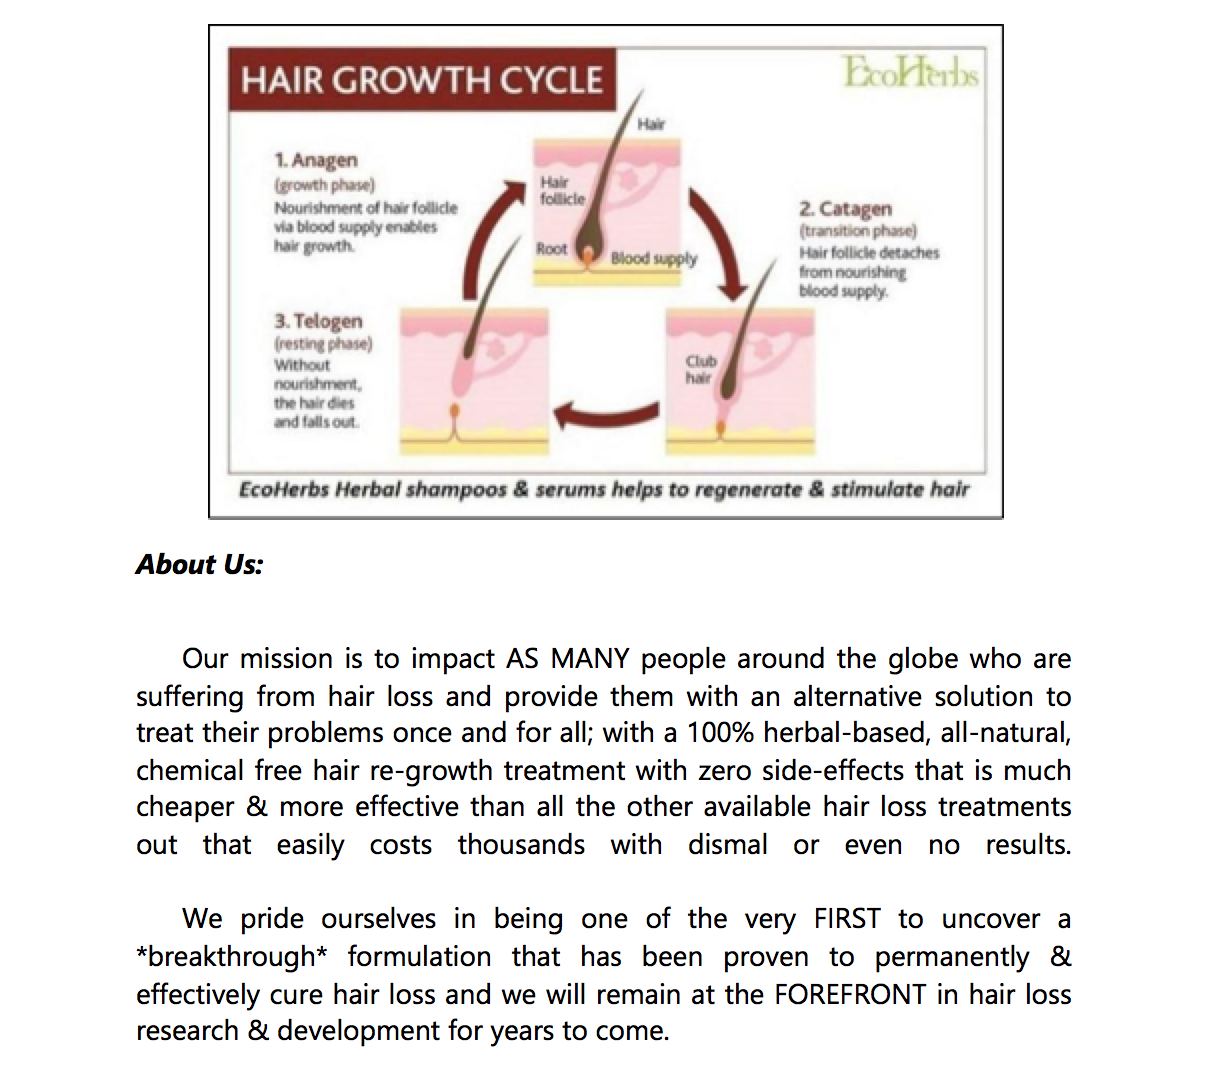 EcoHerbs Neem Care Scalp Rejuvenation Package For Hair Loss, Hair Fall, Thinning Hair, Softer, Stronger Hair (FOR WOMEN)